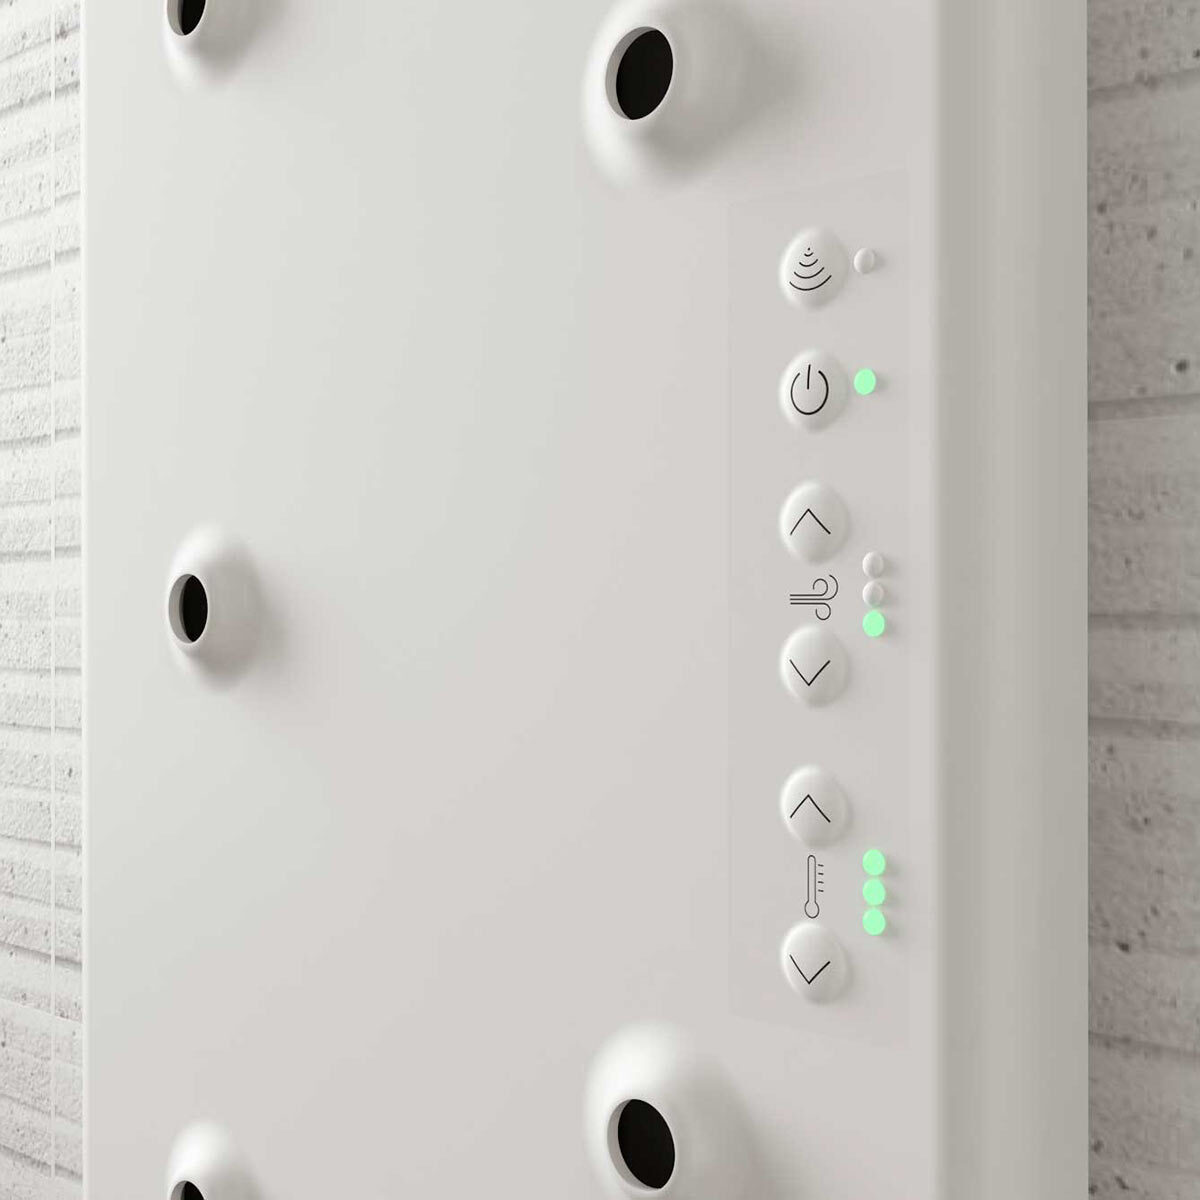 Close up lifestyle image of dryer showcasing controls